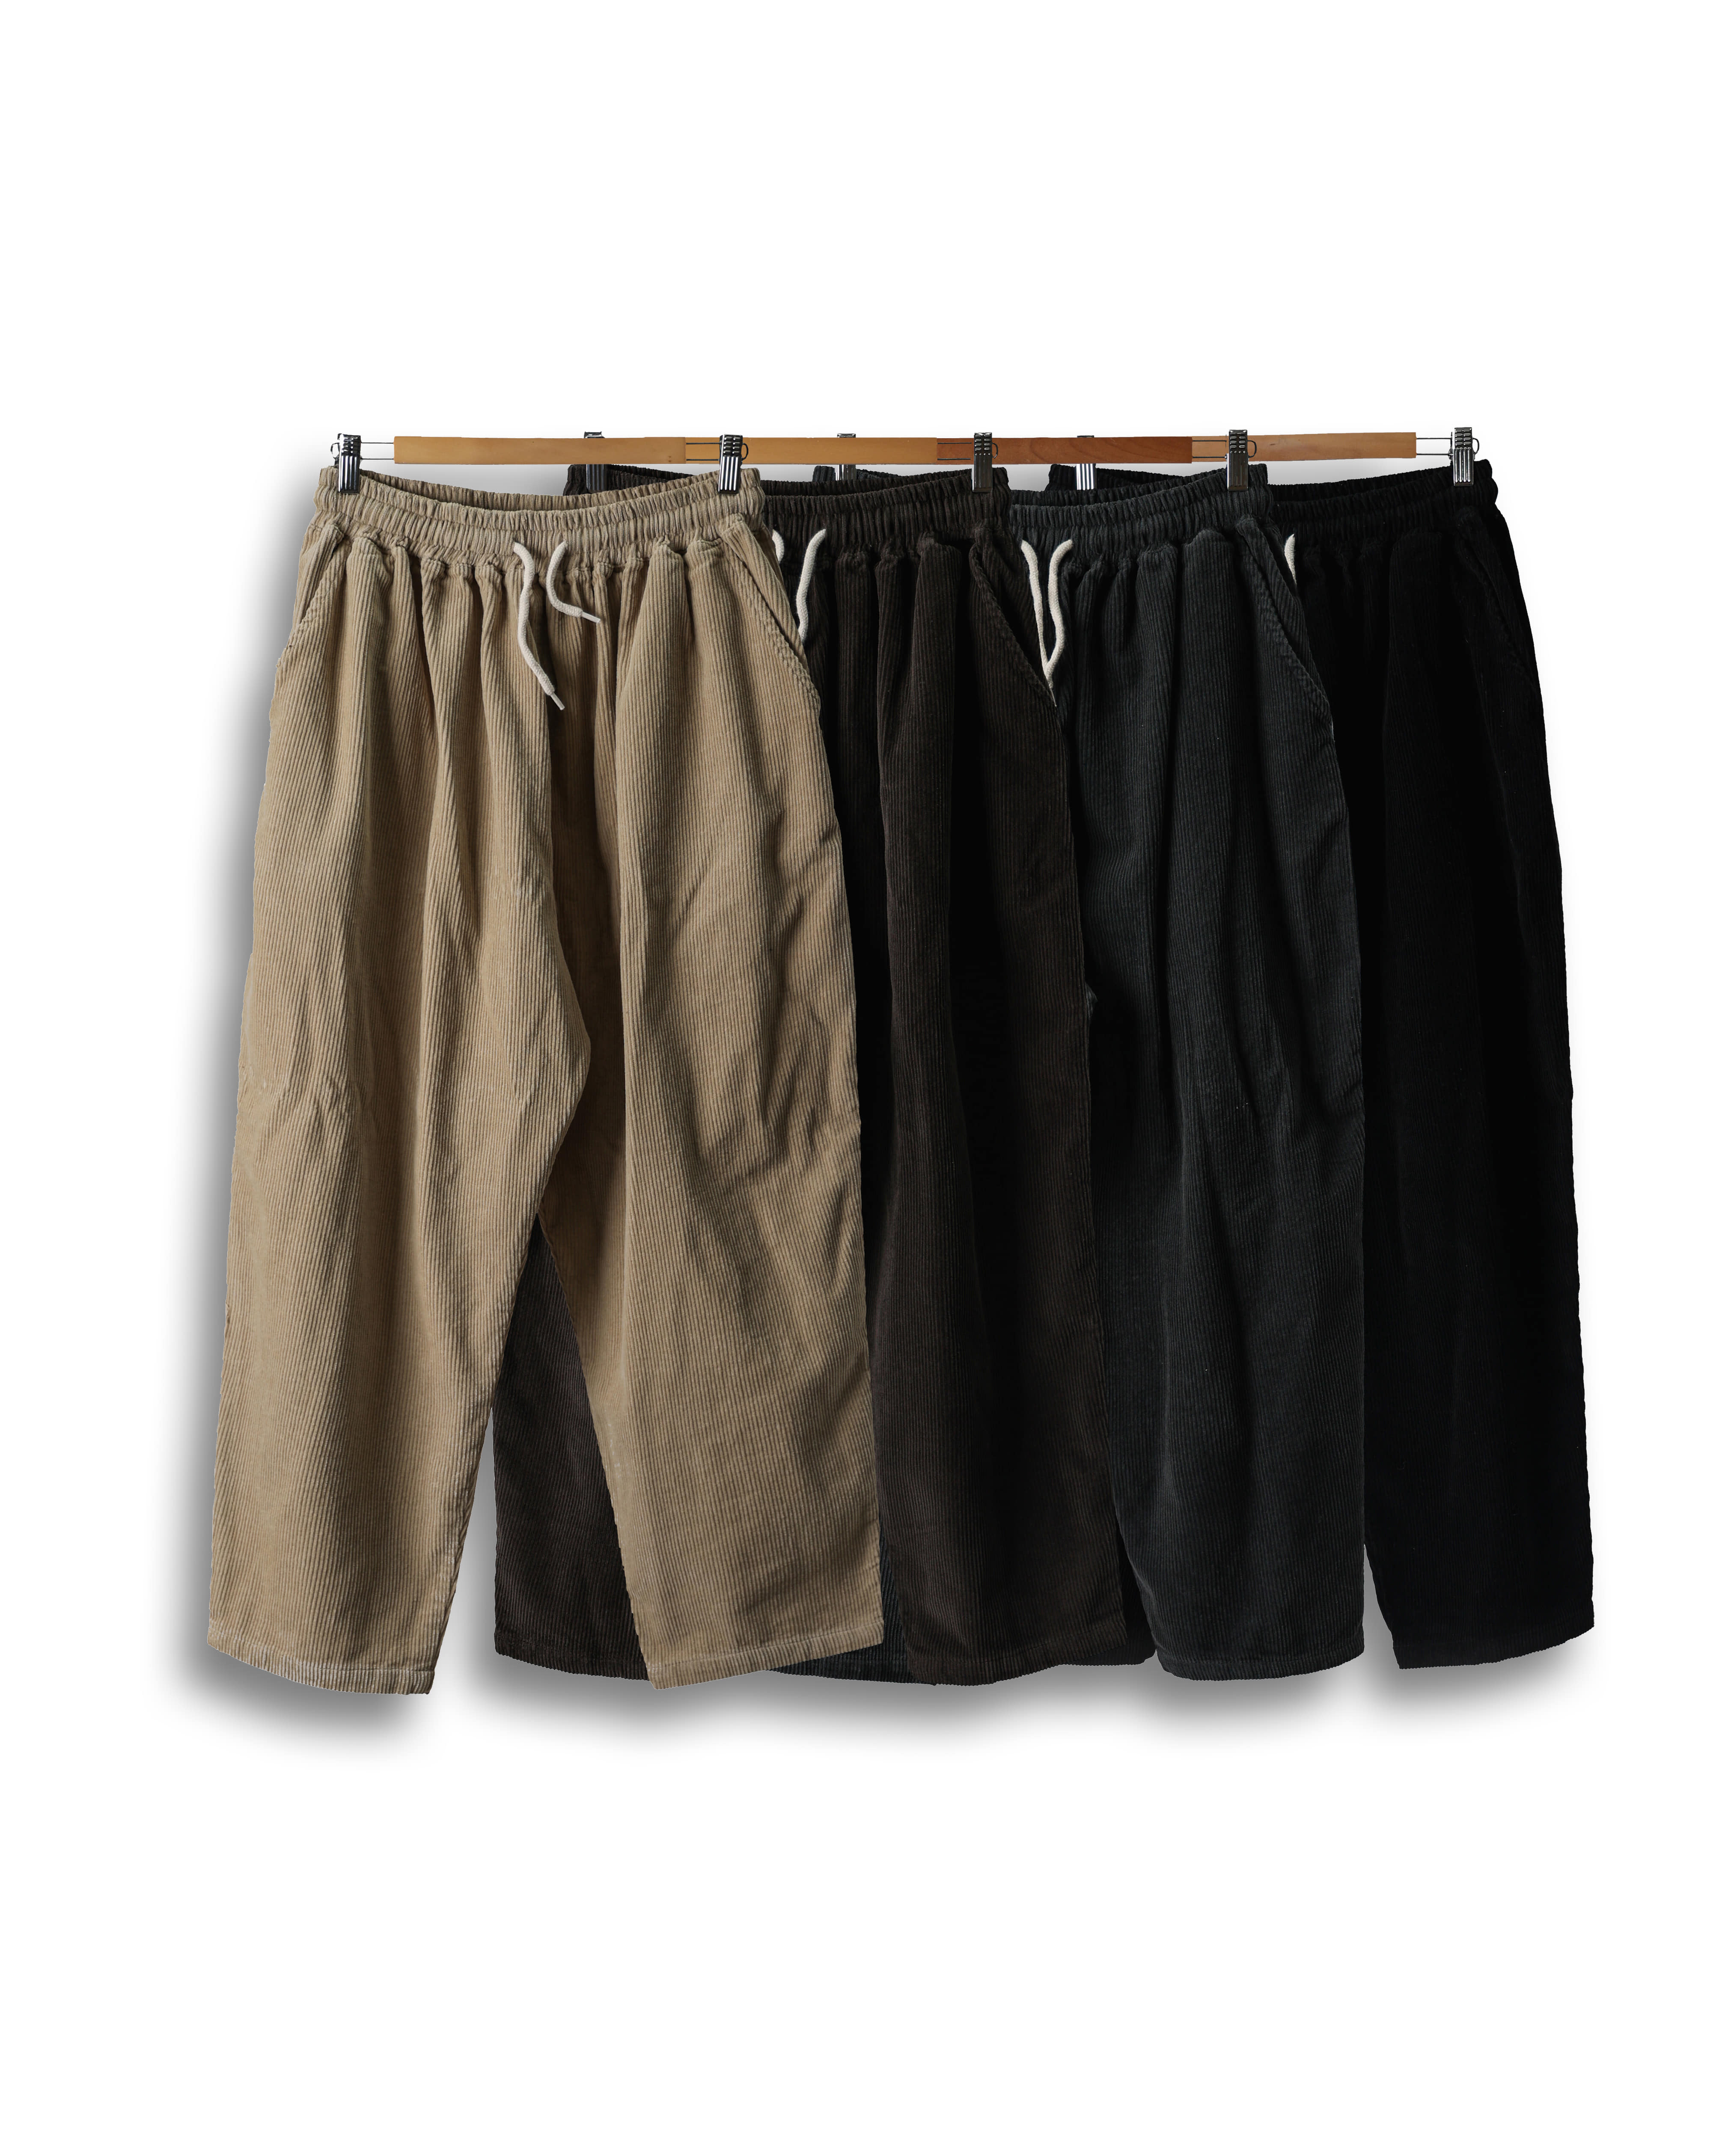 RAM Mono Corduroy Baggy Easy pants (Black/Charcoal/Brown/Beige)